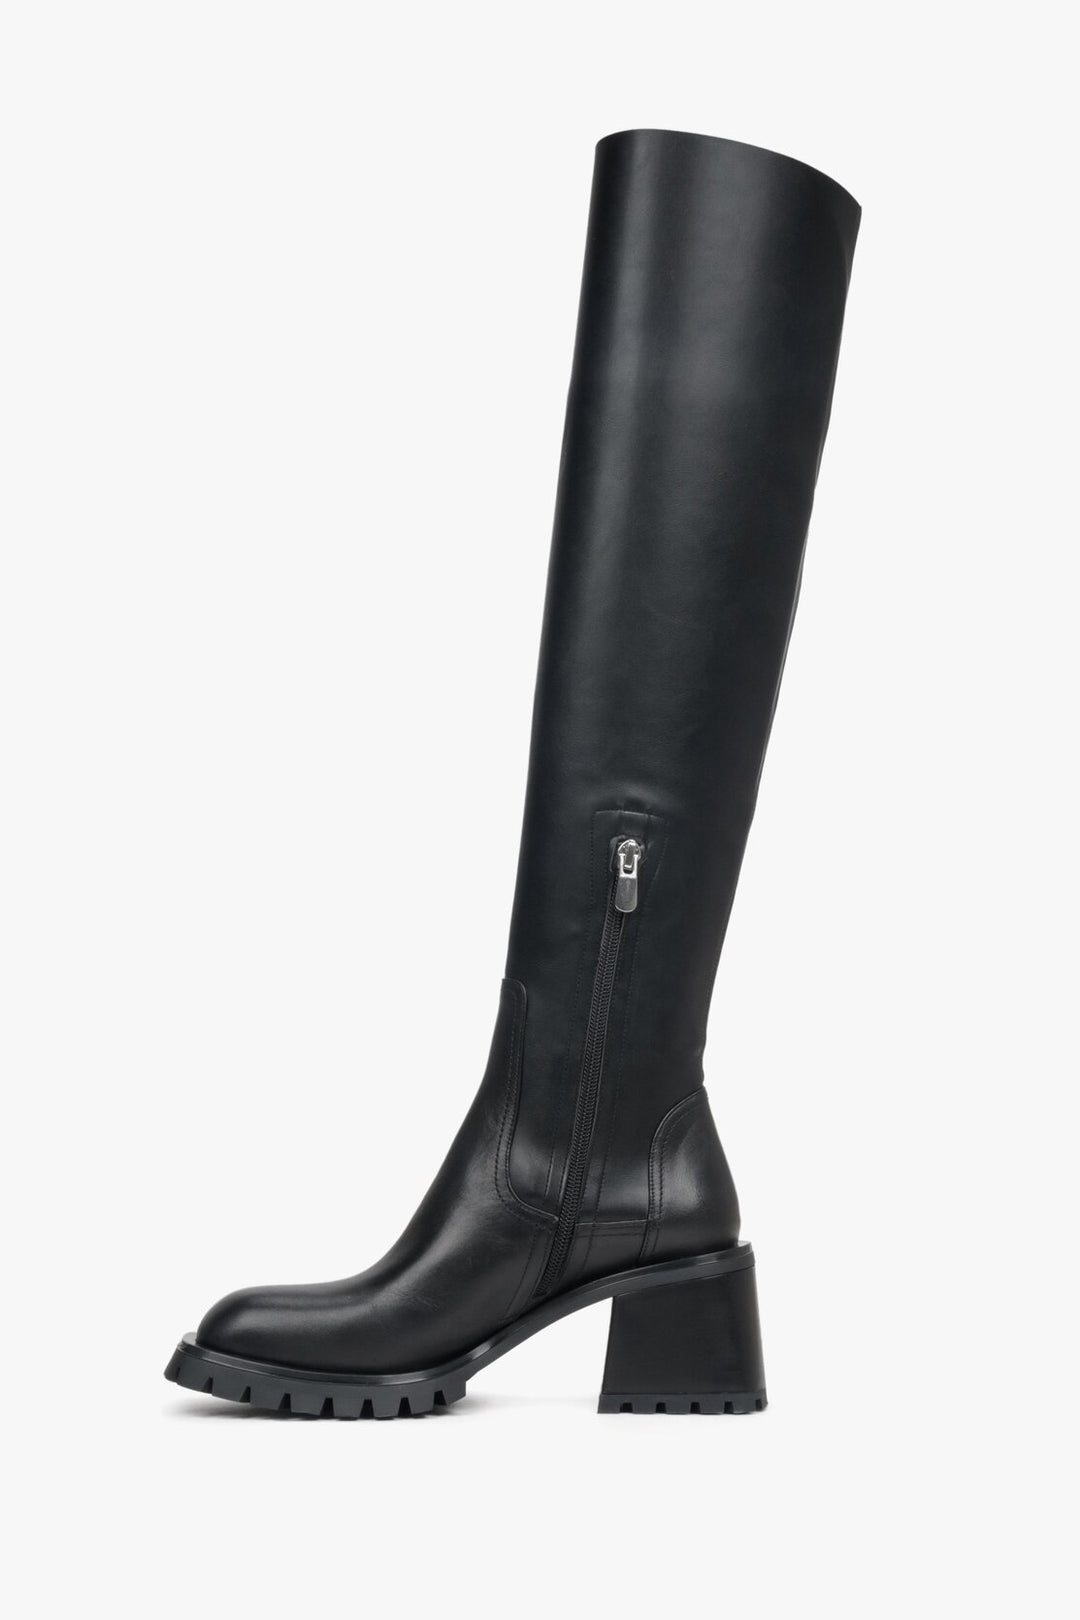 Stylish women's black boots for fall - shoe profile.